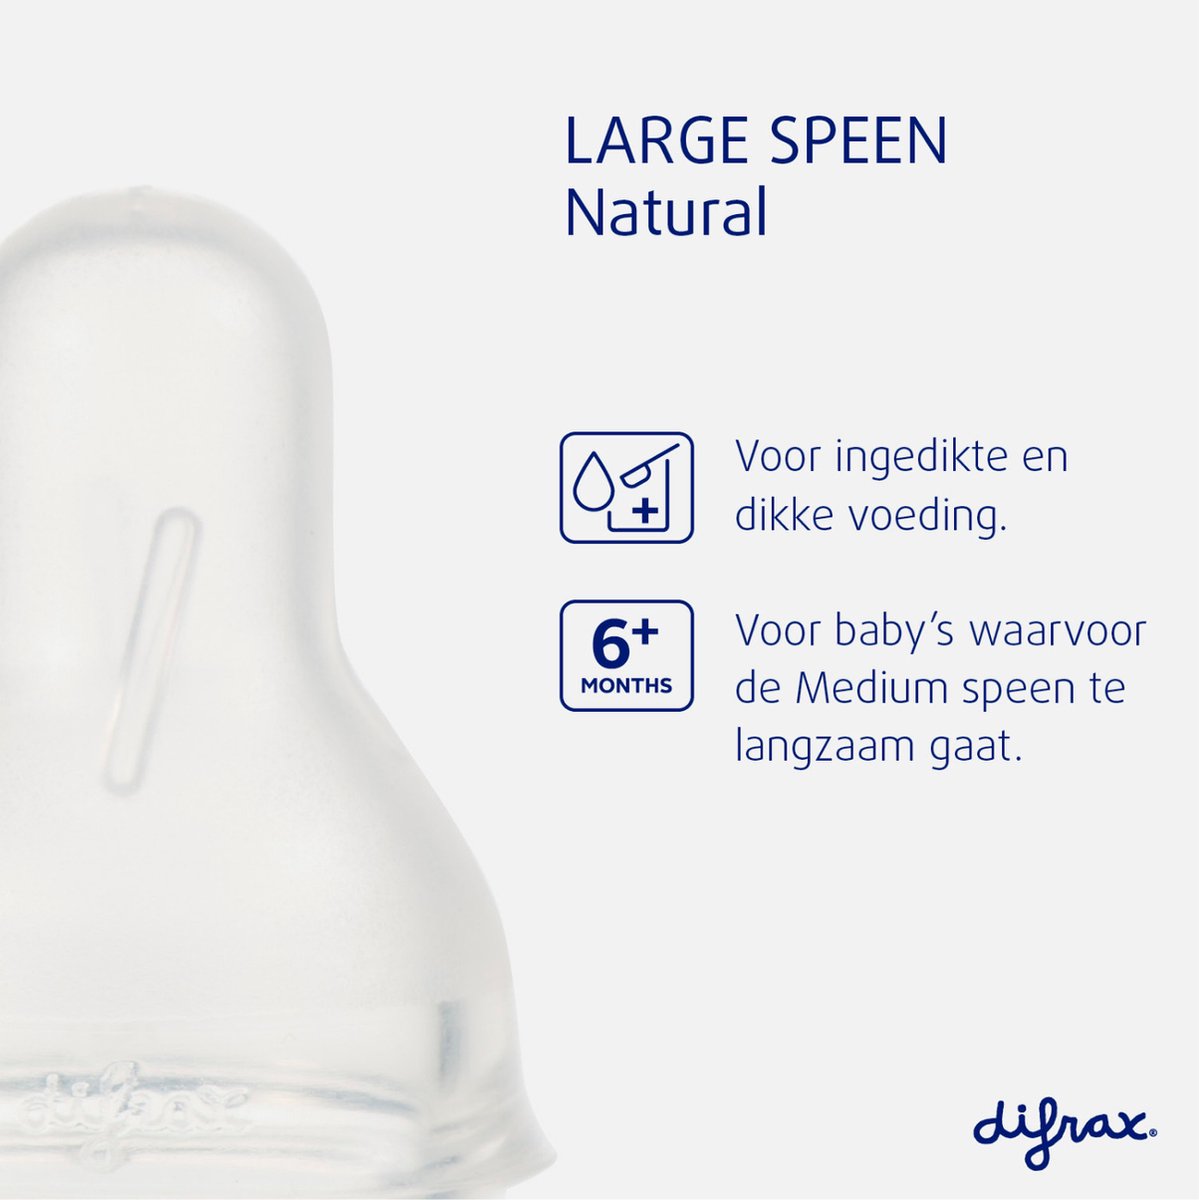 Difrax Flessenspeen Natural - Maat Large - 2 stuks | bol.com